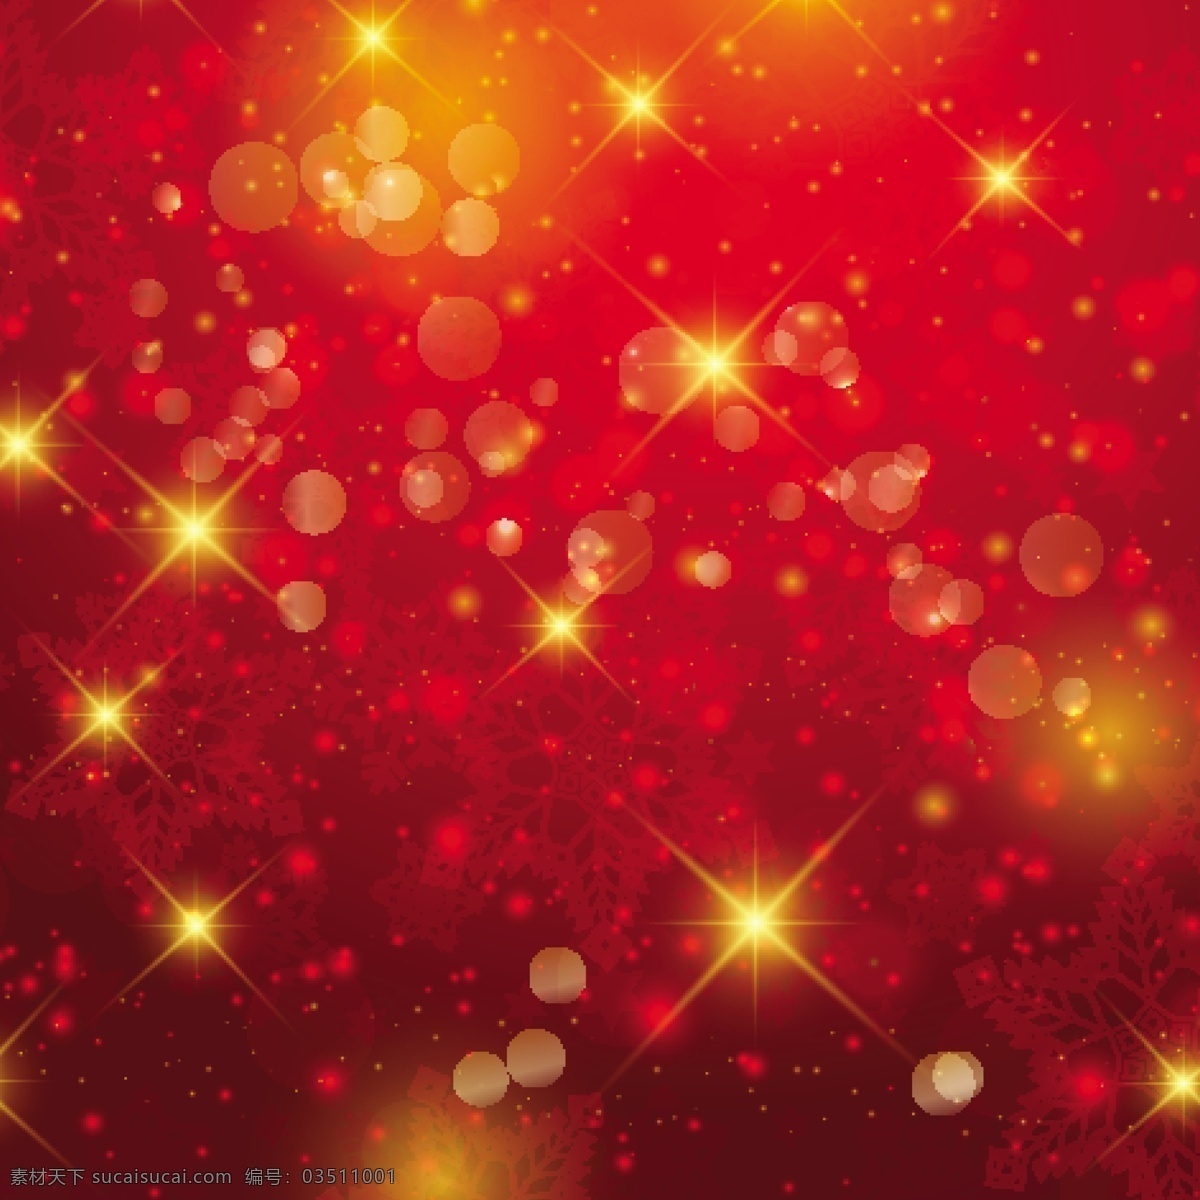 golden and red bokeh background 背景 圣诞节 抽象的 雪 冬天 红色的圣诞 圣诞背景 红色背景 雪花 闪闪发光 金色的 背景虚化 冬天的背景 金色的背景 雪的背景 喜庆 有光泽